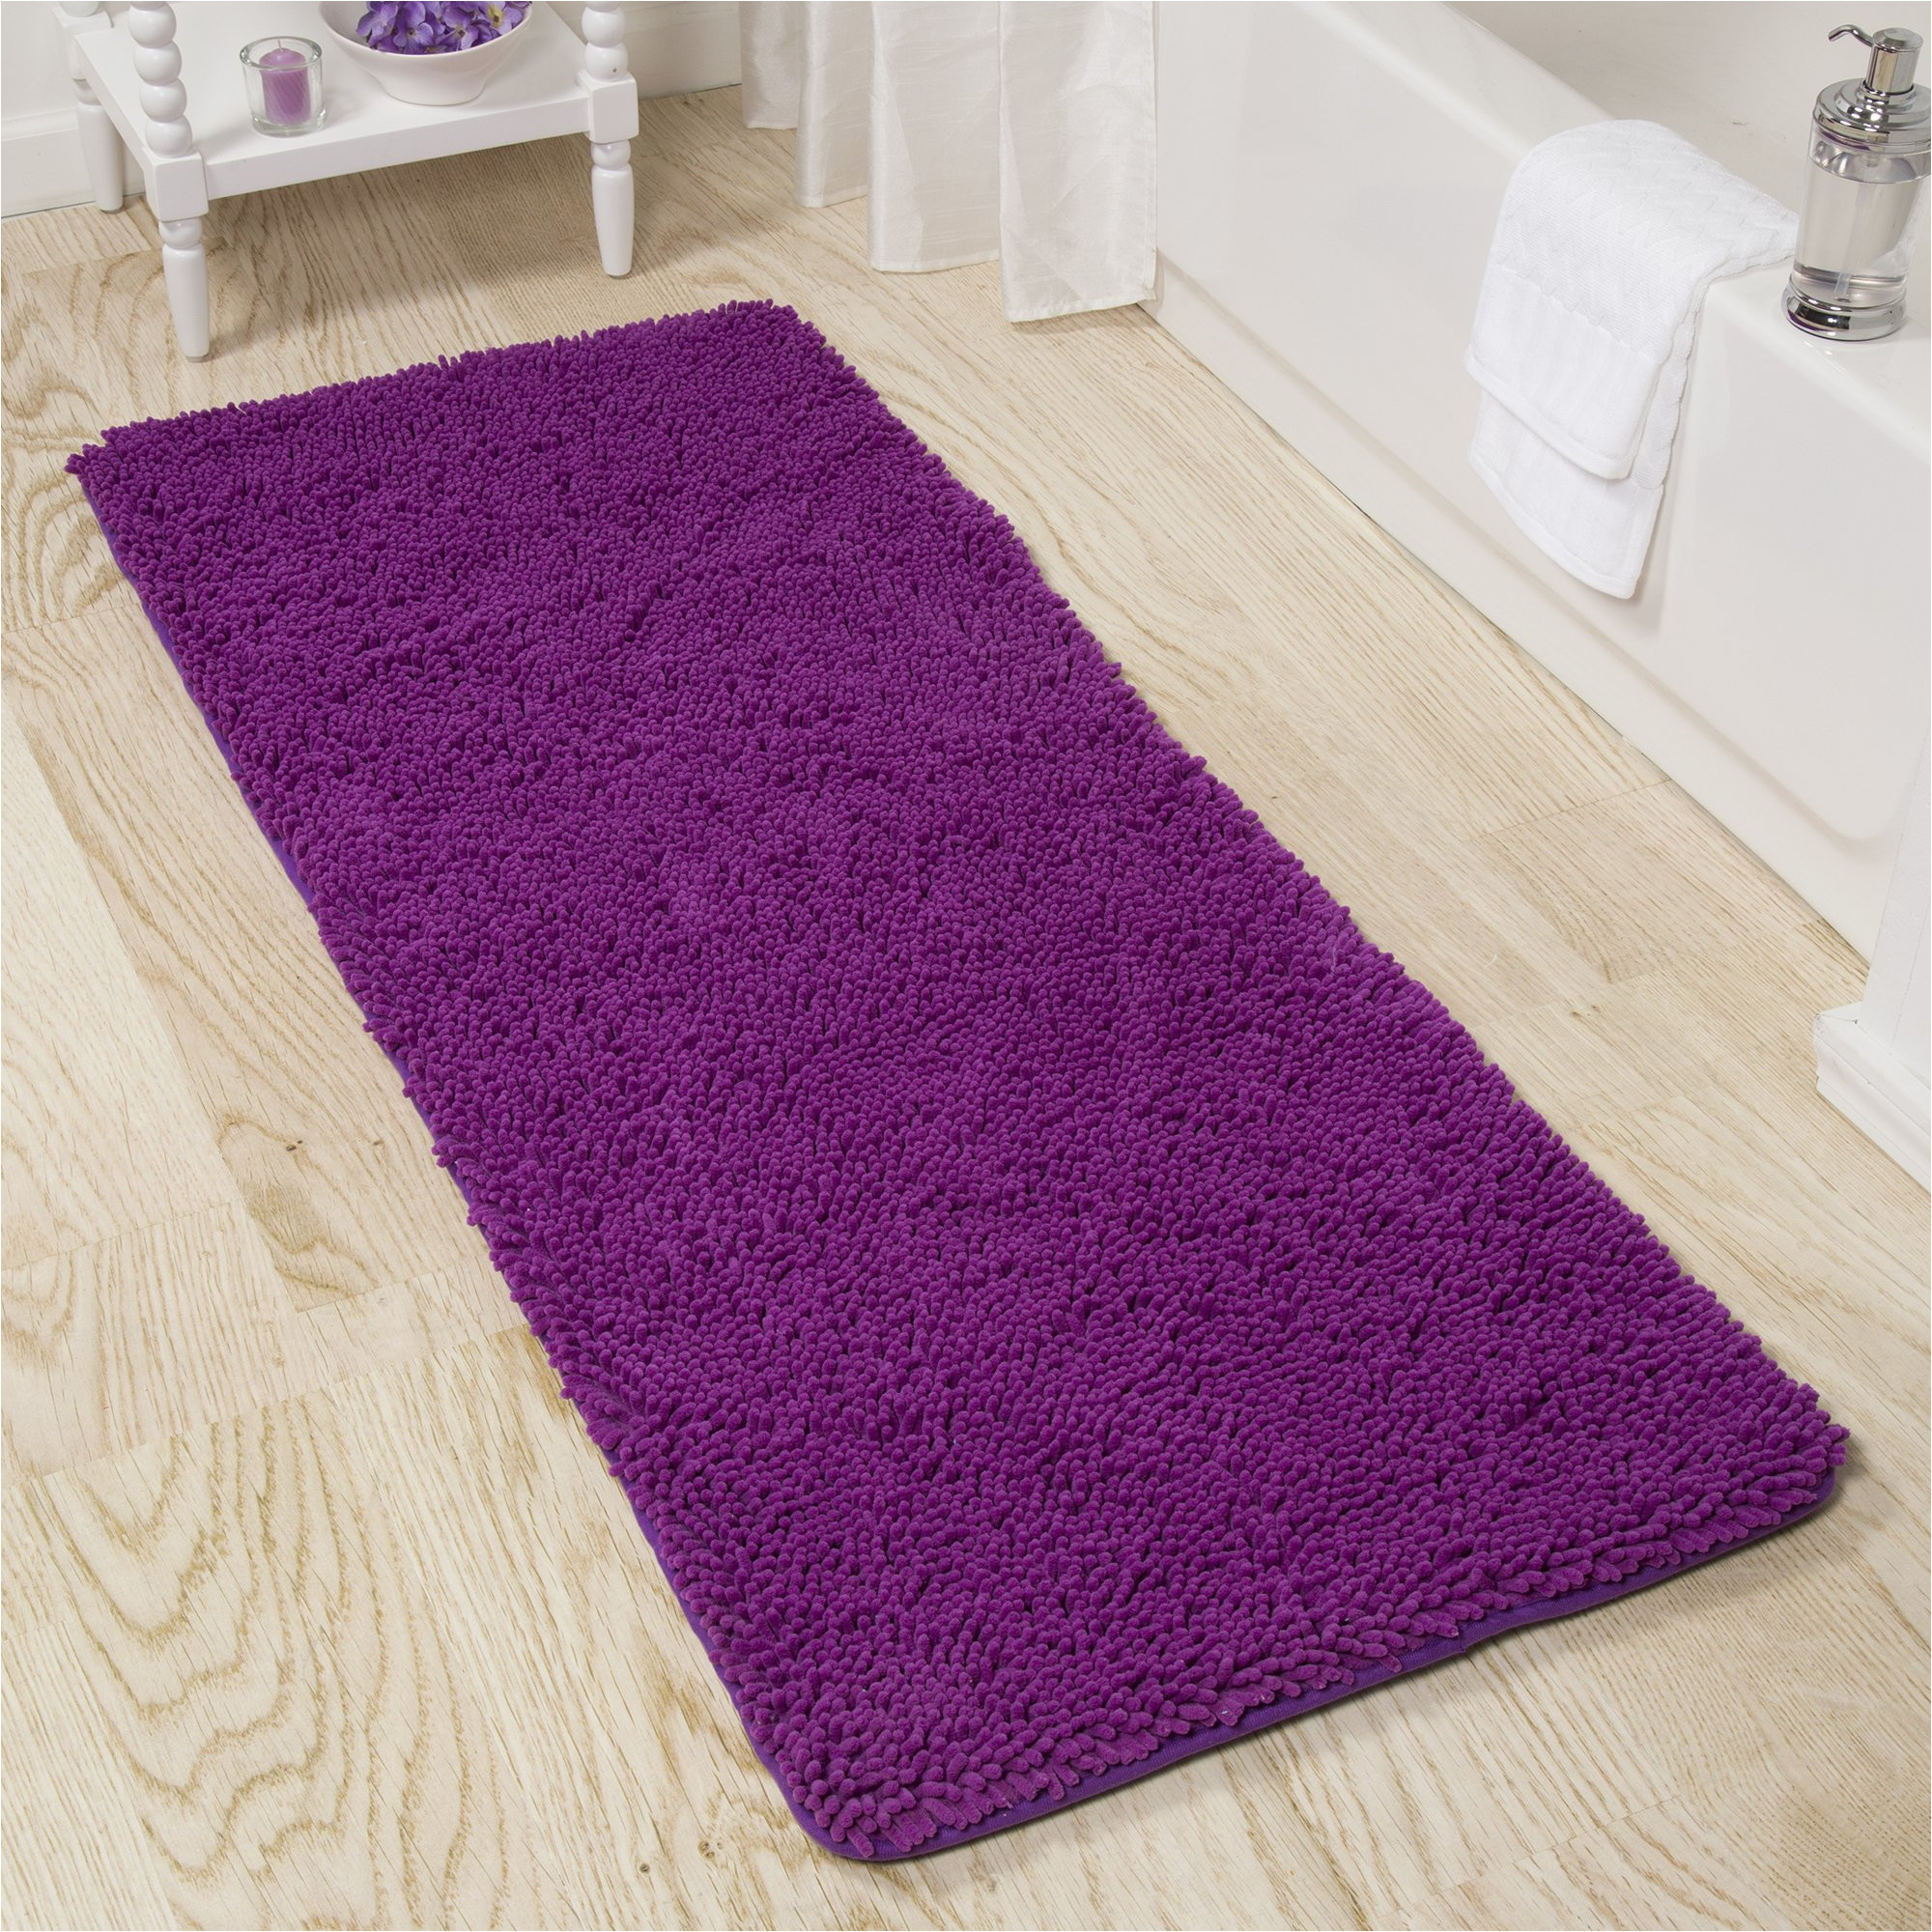 58 Inch Bath Rug Shag Memory Foam Bath Mat – 58-inch by 24-inch Runner with Non-slip Backing – Absorbent High-pile Chenille Bathroom Rug by Lavish Home (purple)